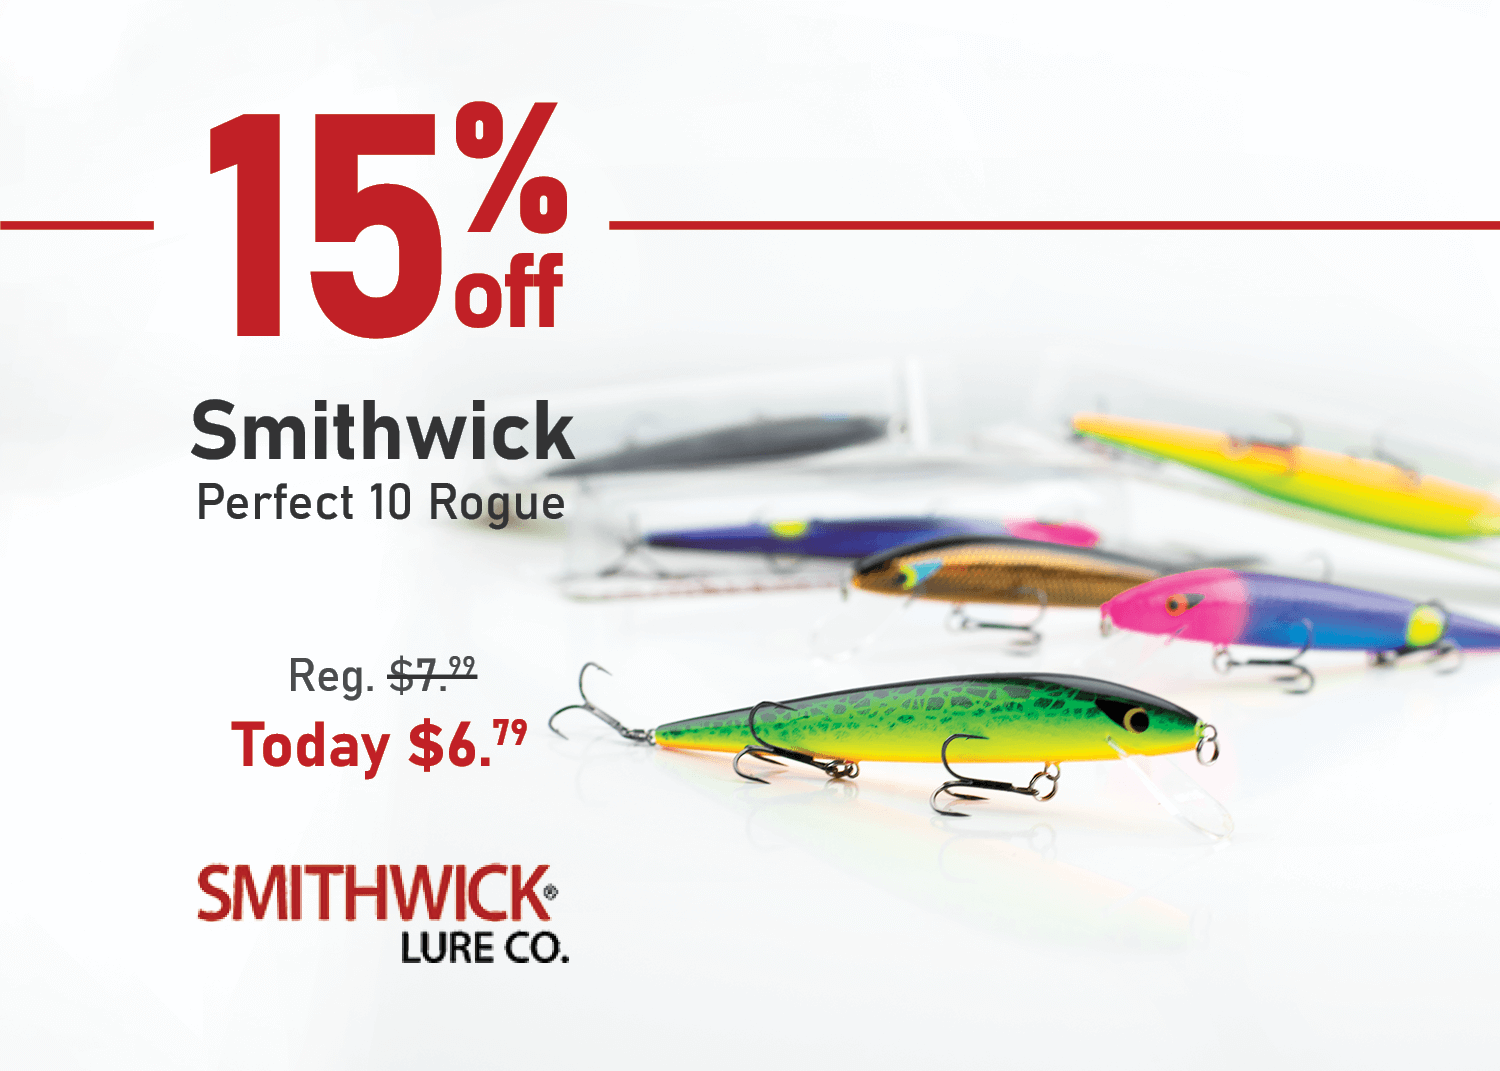 Save 15% on Smithwick Perfect 10 Rogue